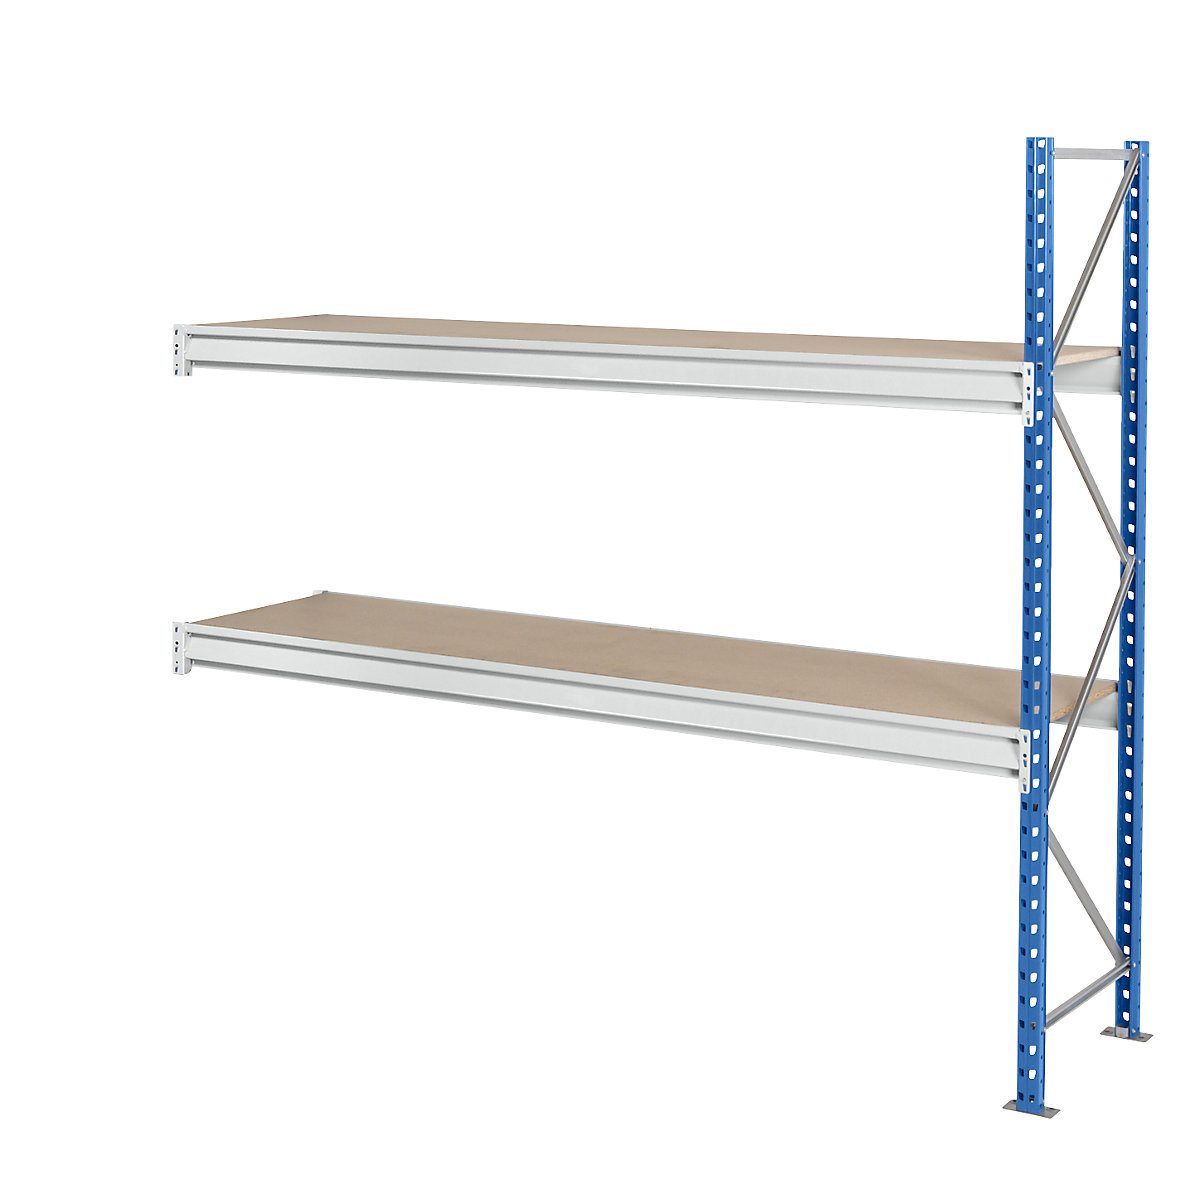 Heavy duty wide span shelving with moulded chipboard shelf panels